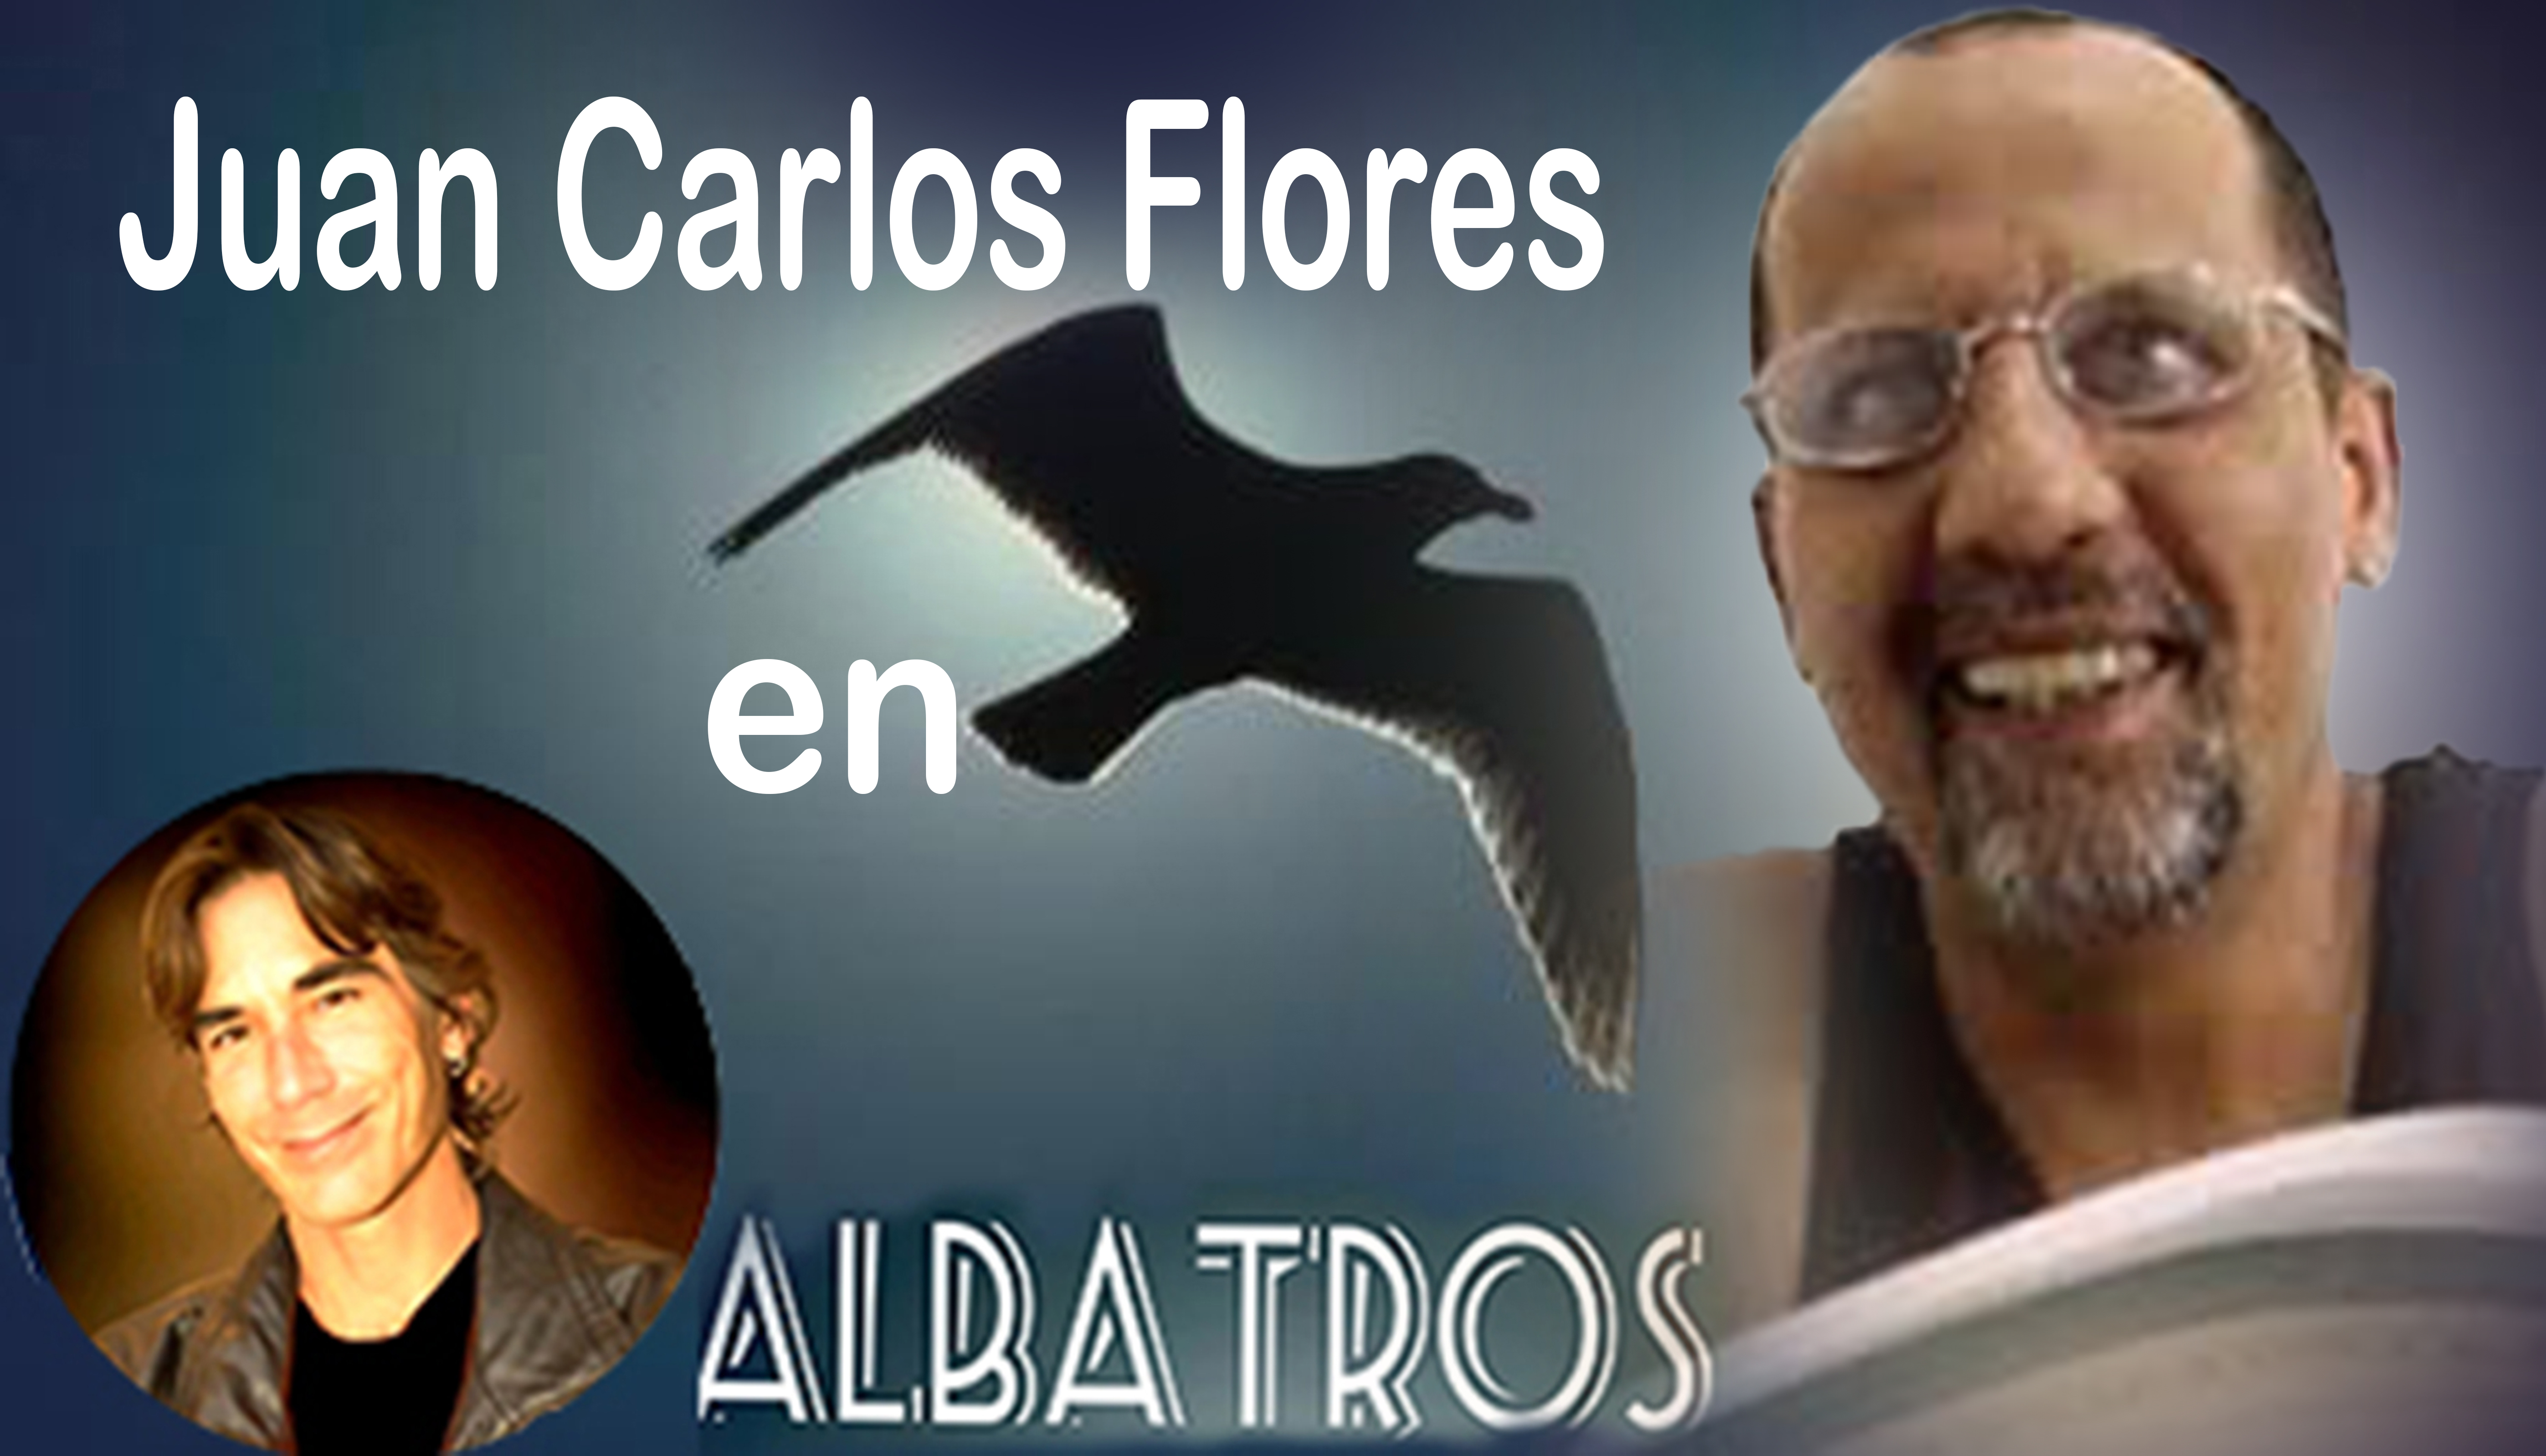 https://0201.nccdn.net/1_2/000/000/08f/b45/juan-carlos-flores-en-albatros.jpg